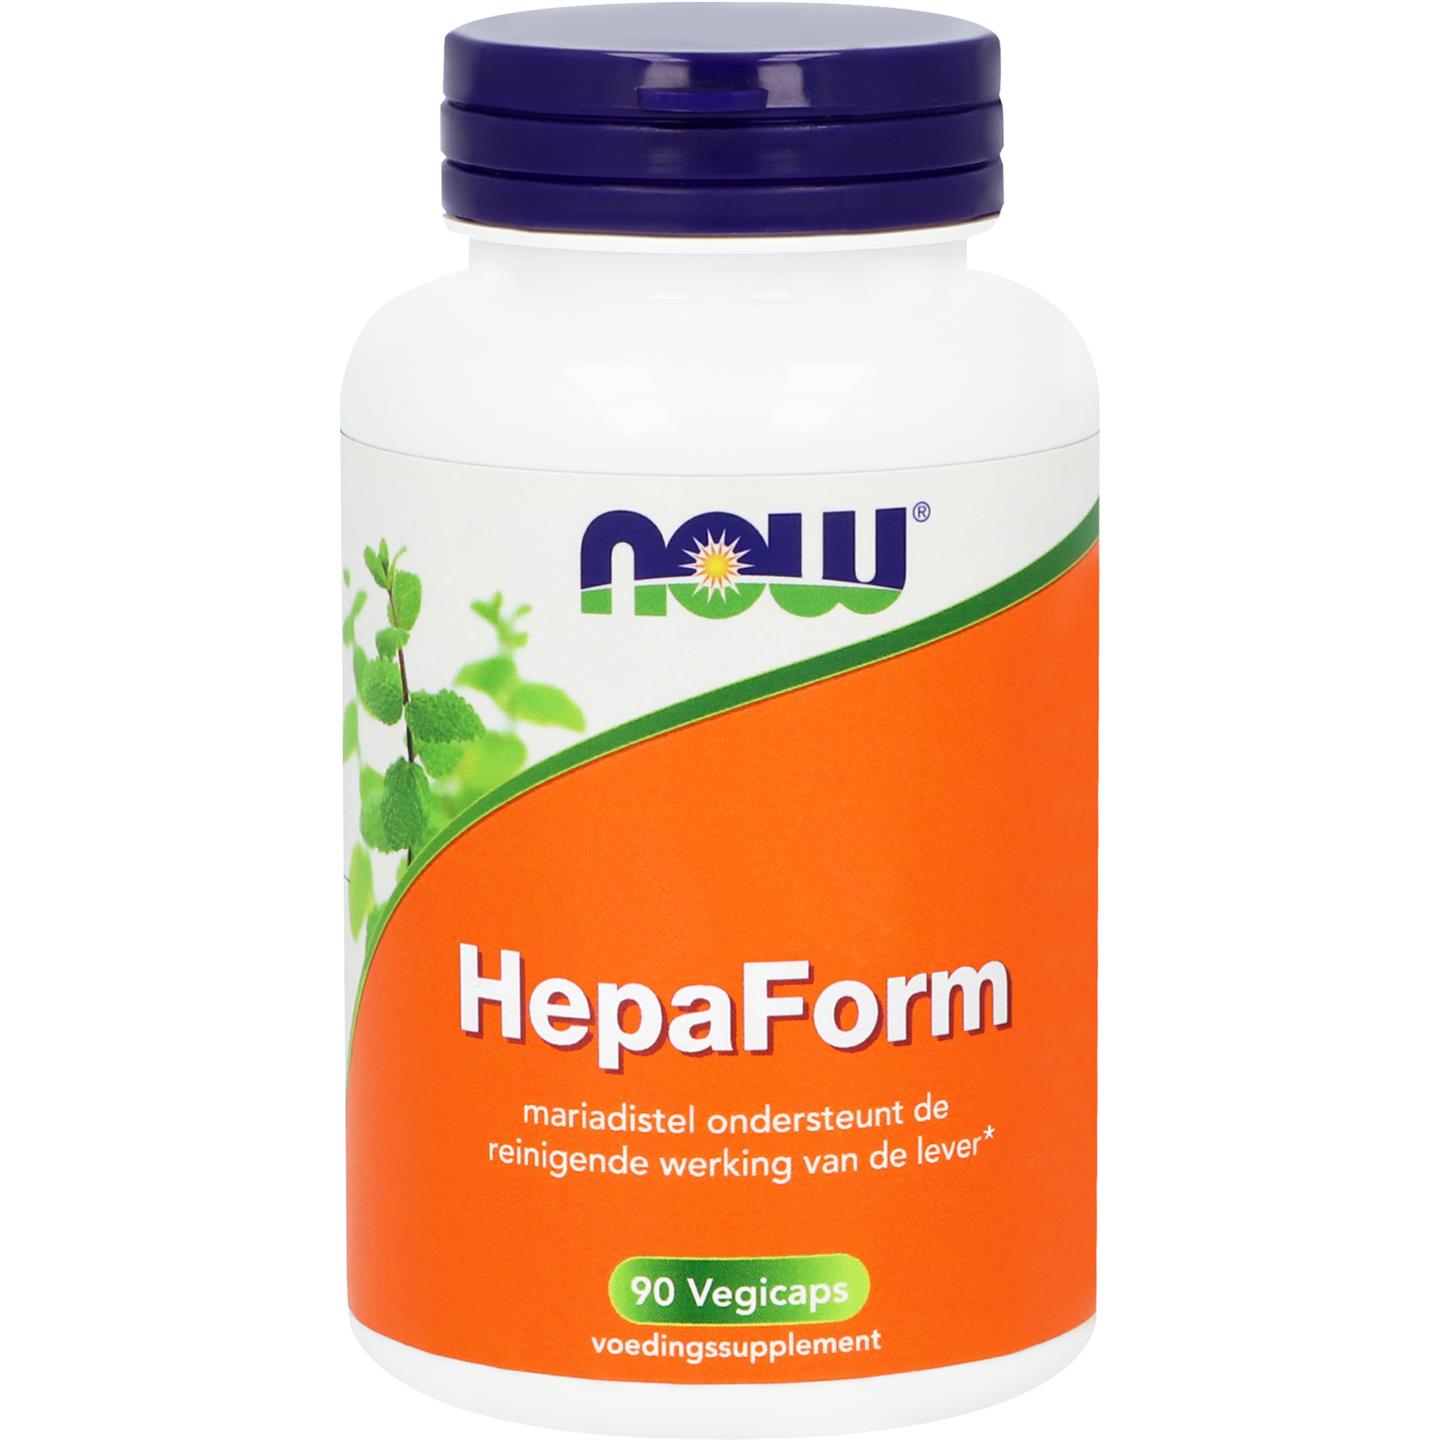 HepaForm